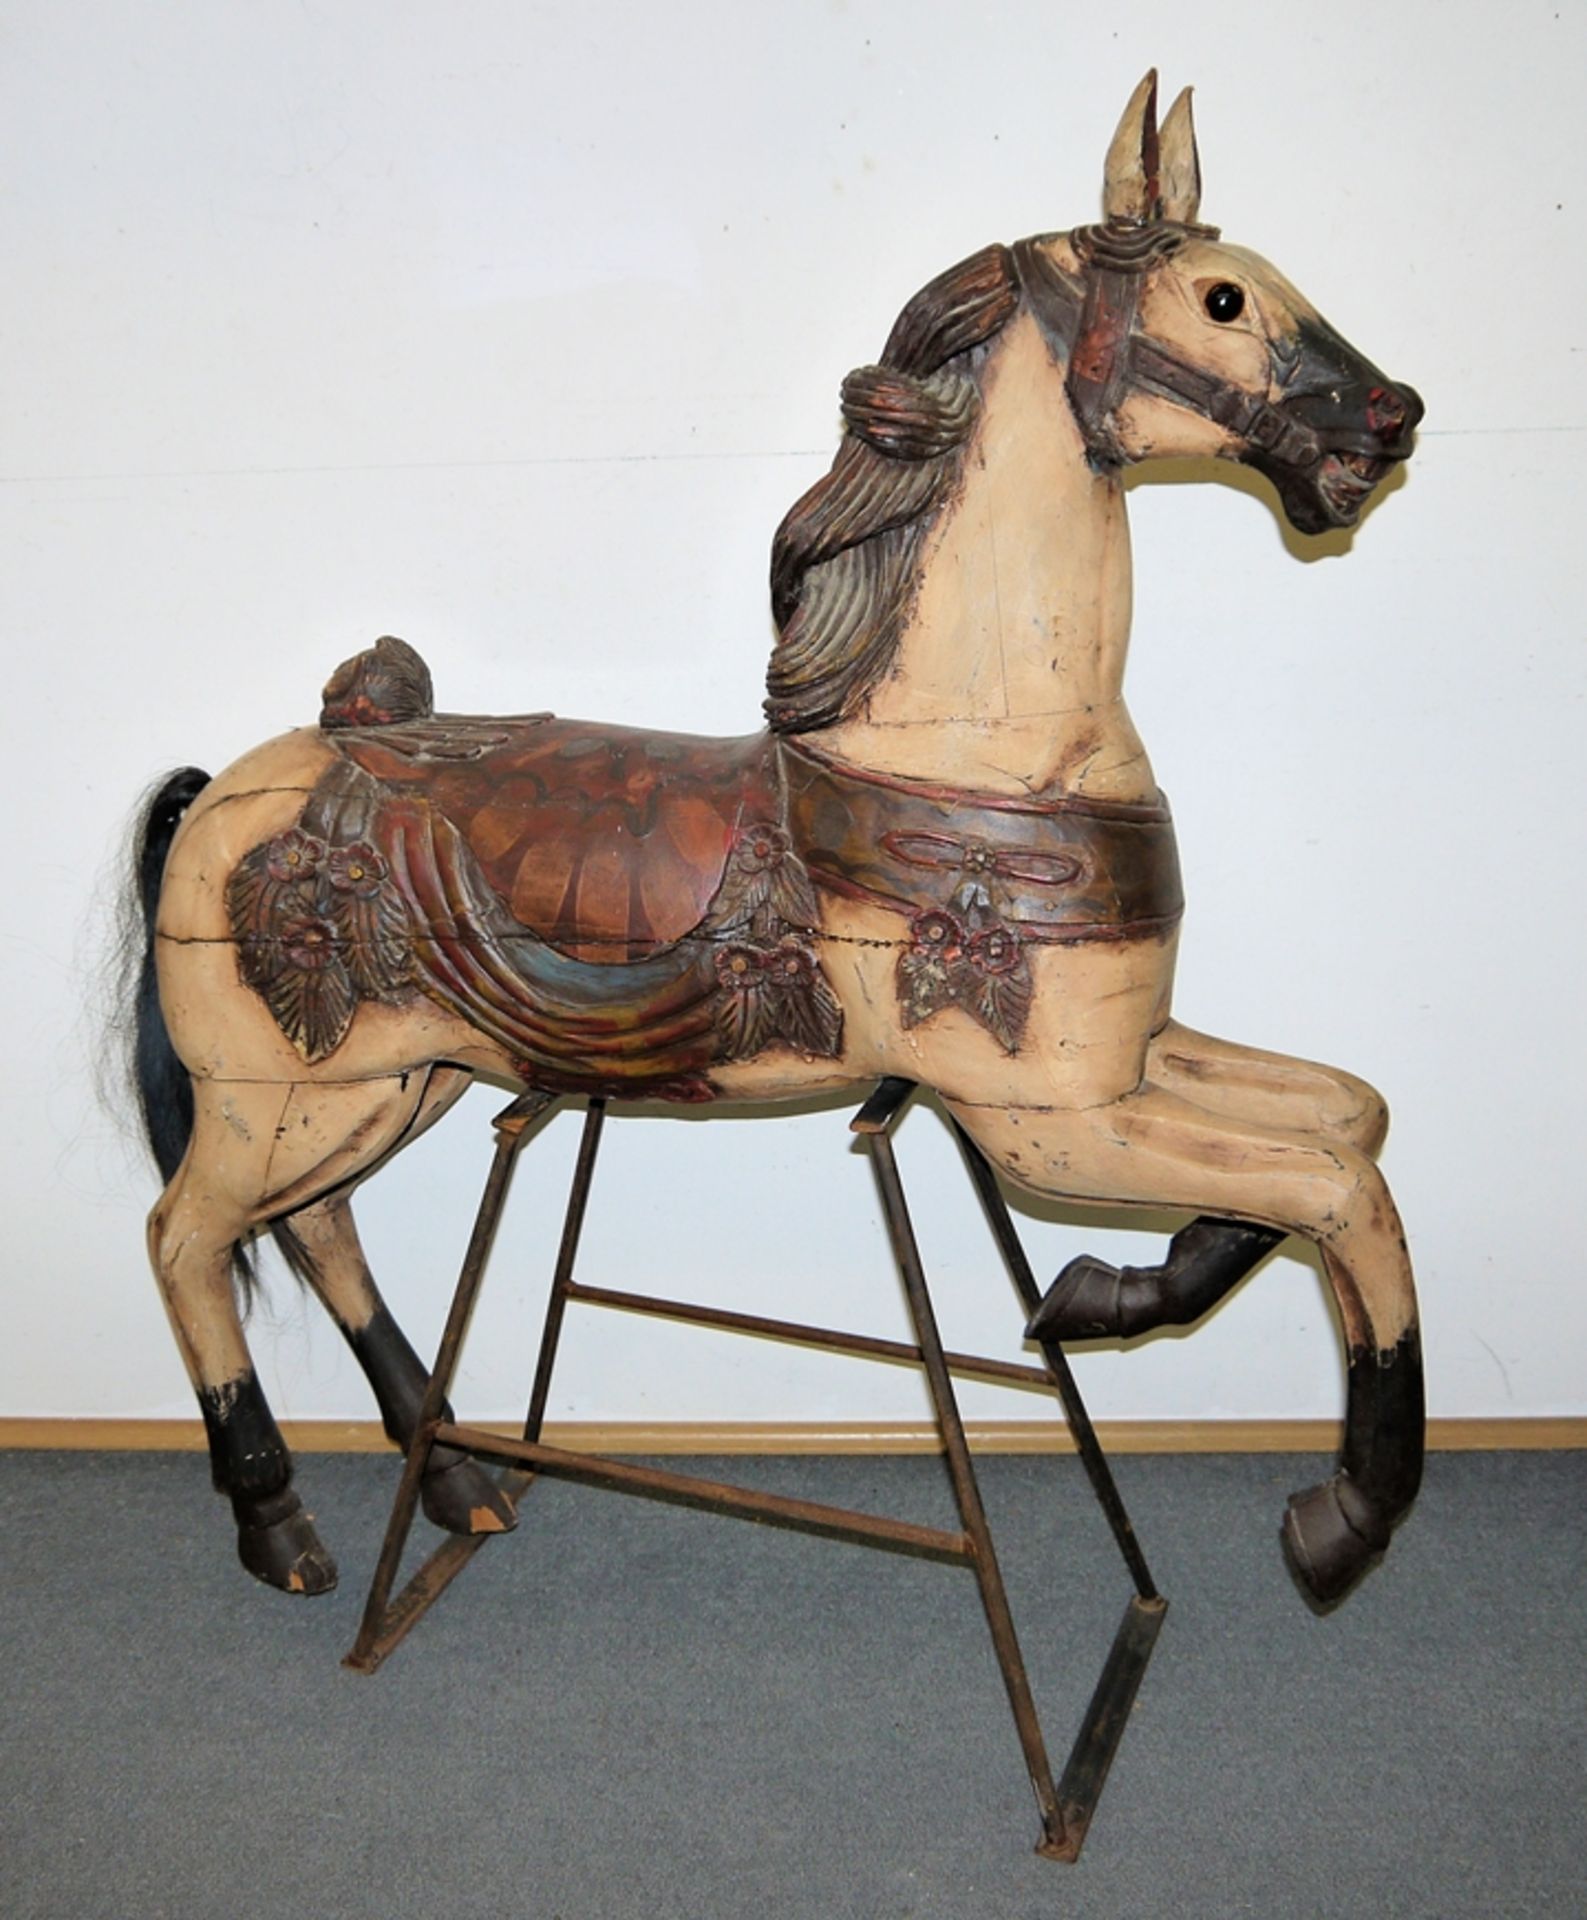 Nostalgic "carousel horse"